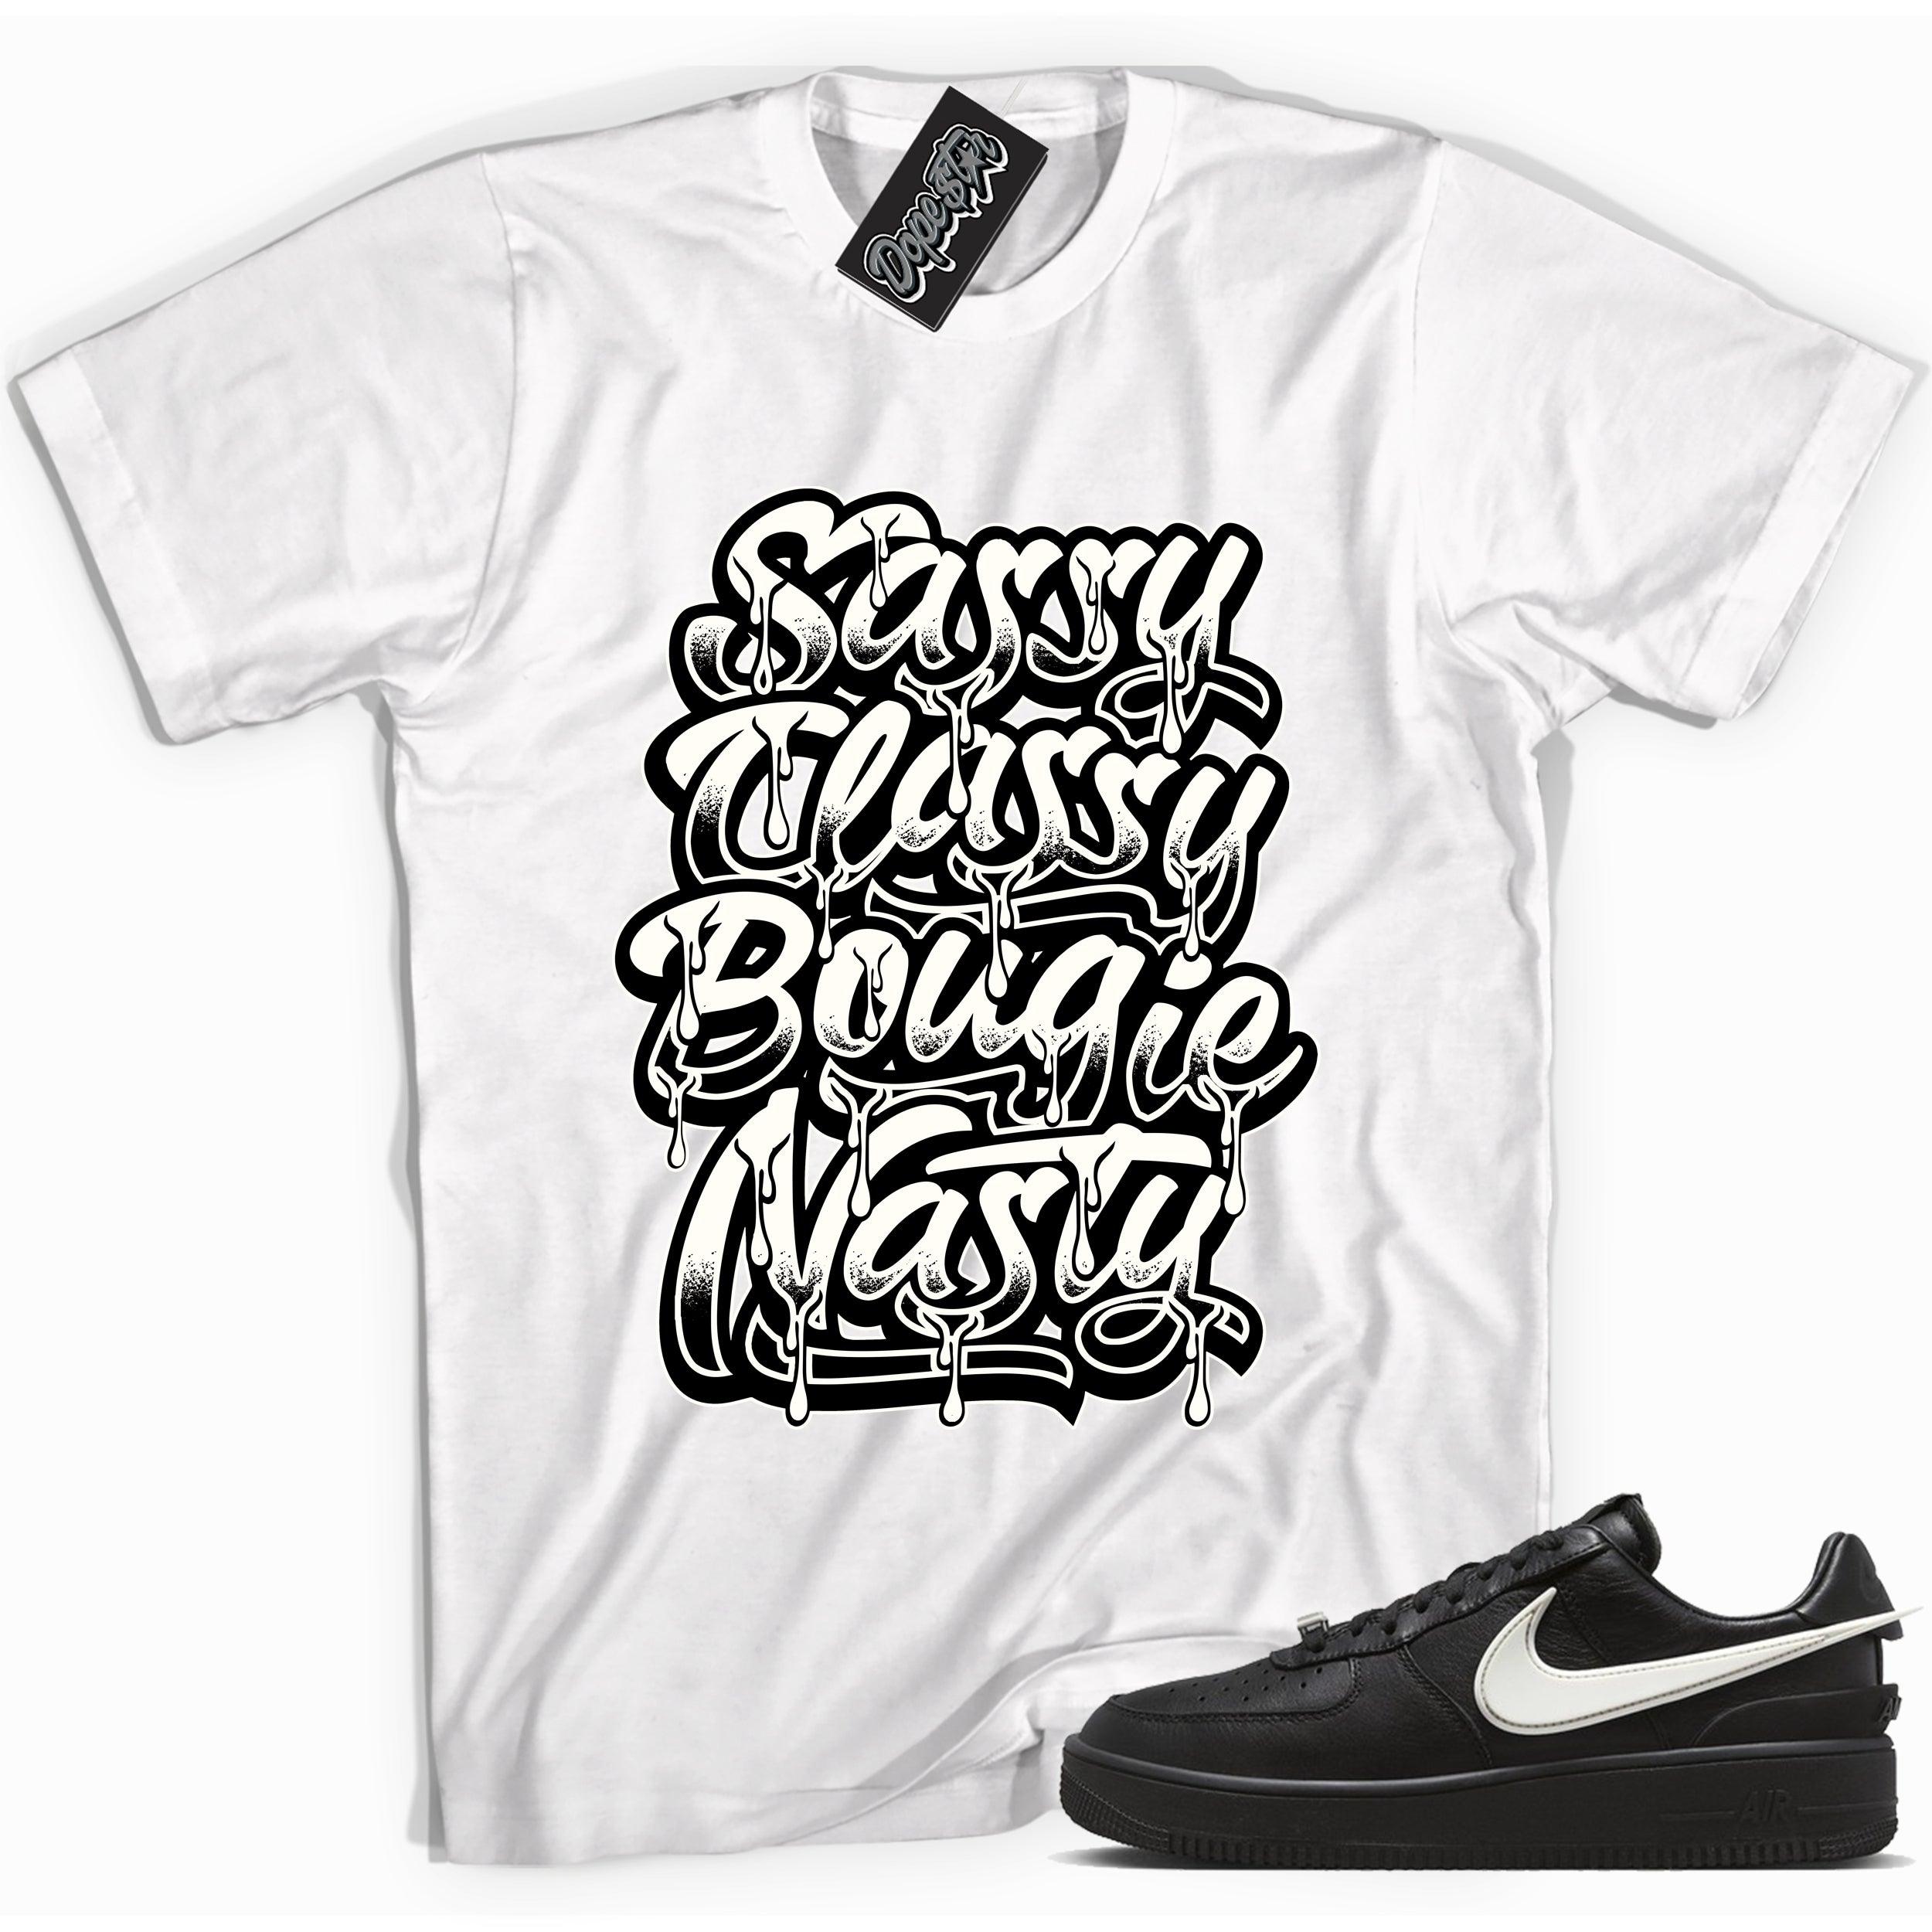 Nike Air Force 1 Low SP Ambush Phantom - Sassy Classy Bougie Nasty - Sneaker Shirts Outlet